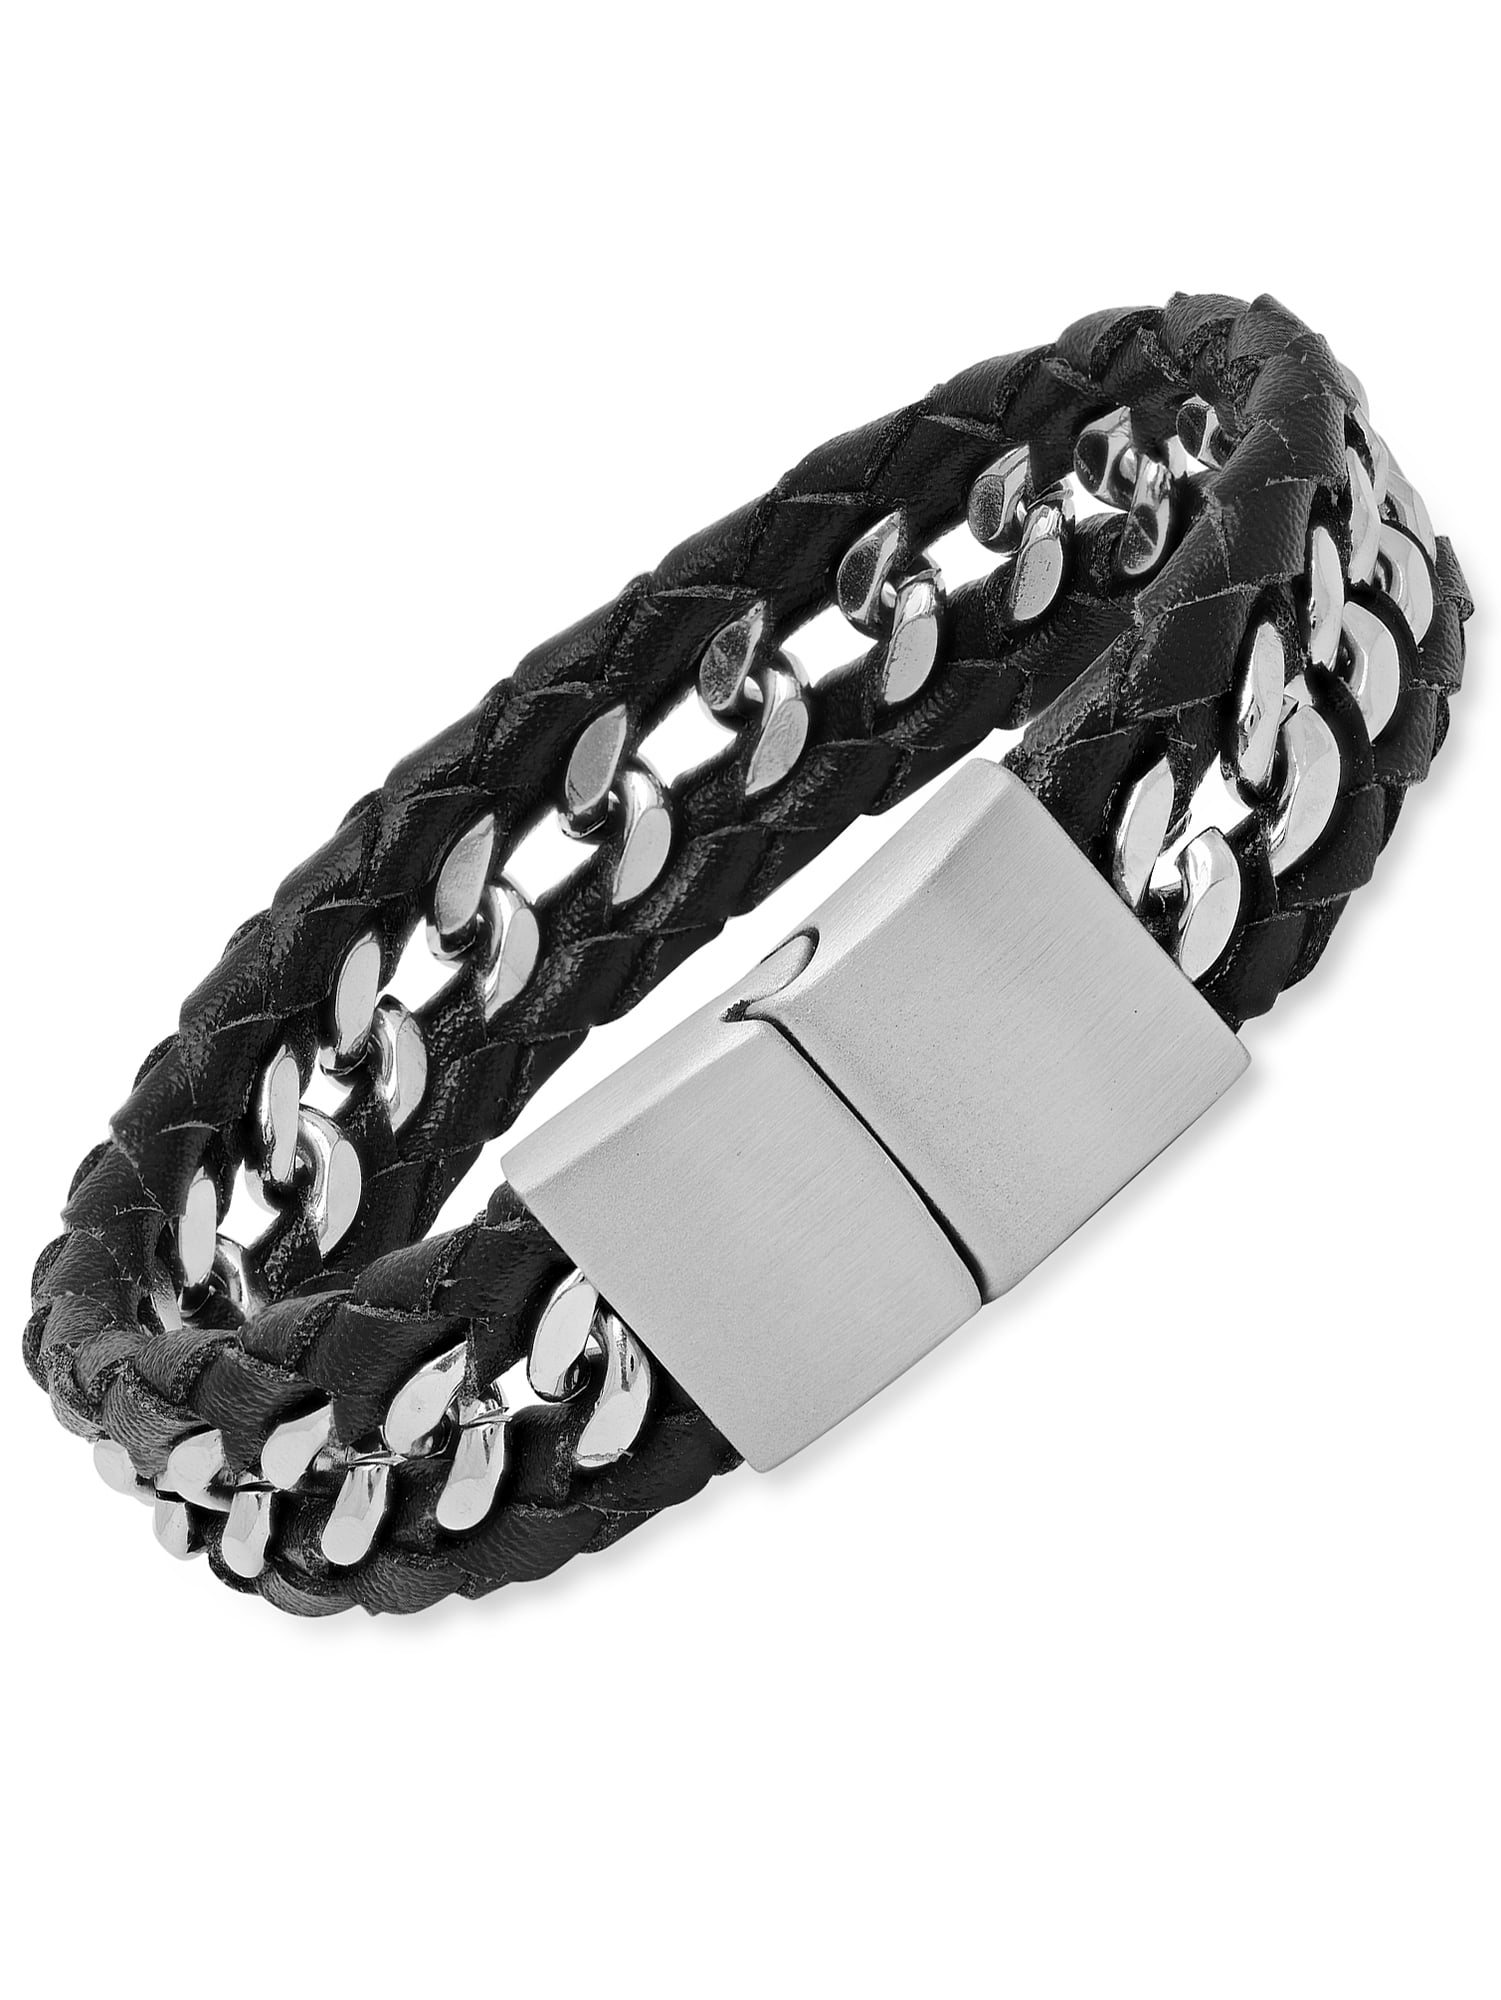 Stainless Steel Locket Charm Diffuser Bracelet / Mens Black Leather  Bracelet - Buy Mens Leather Bracelet,Essential Oil Bracelet,Black Leather  Bracelet